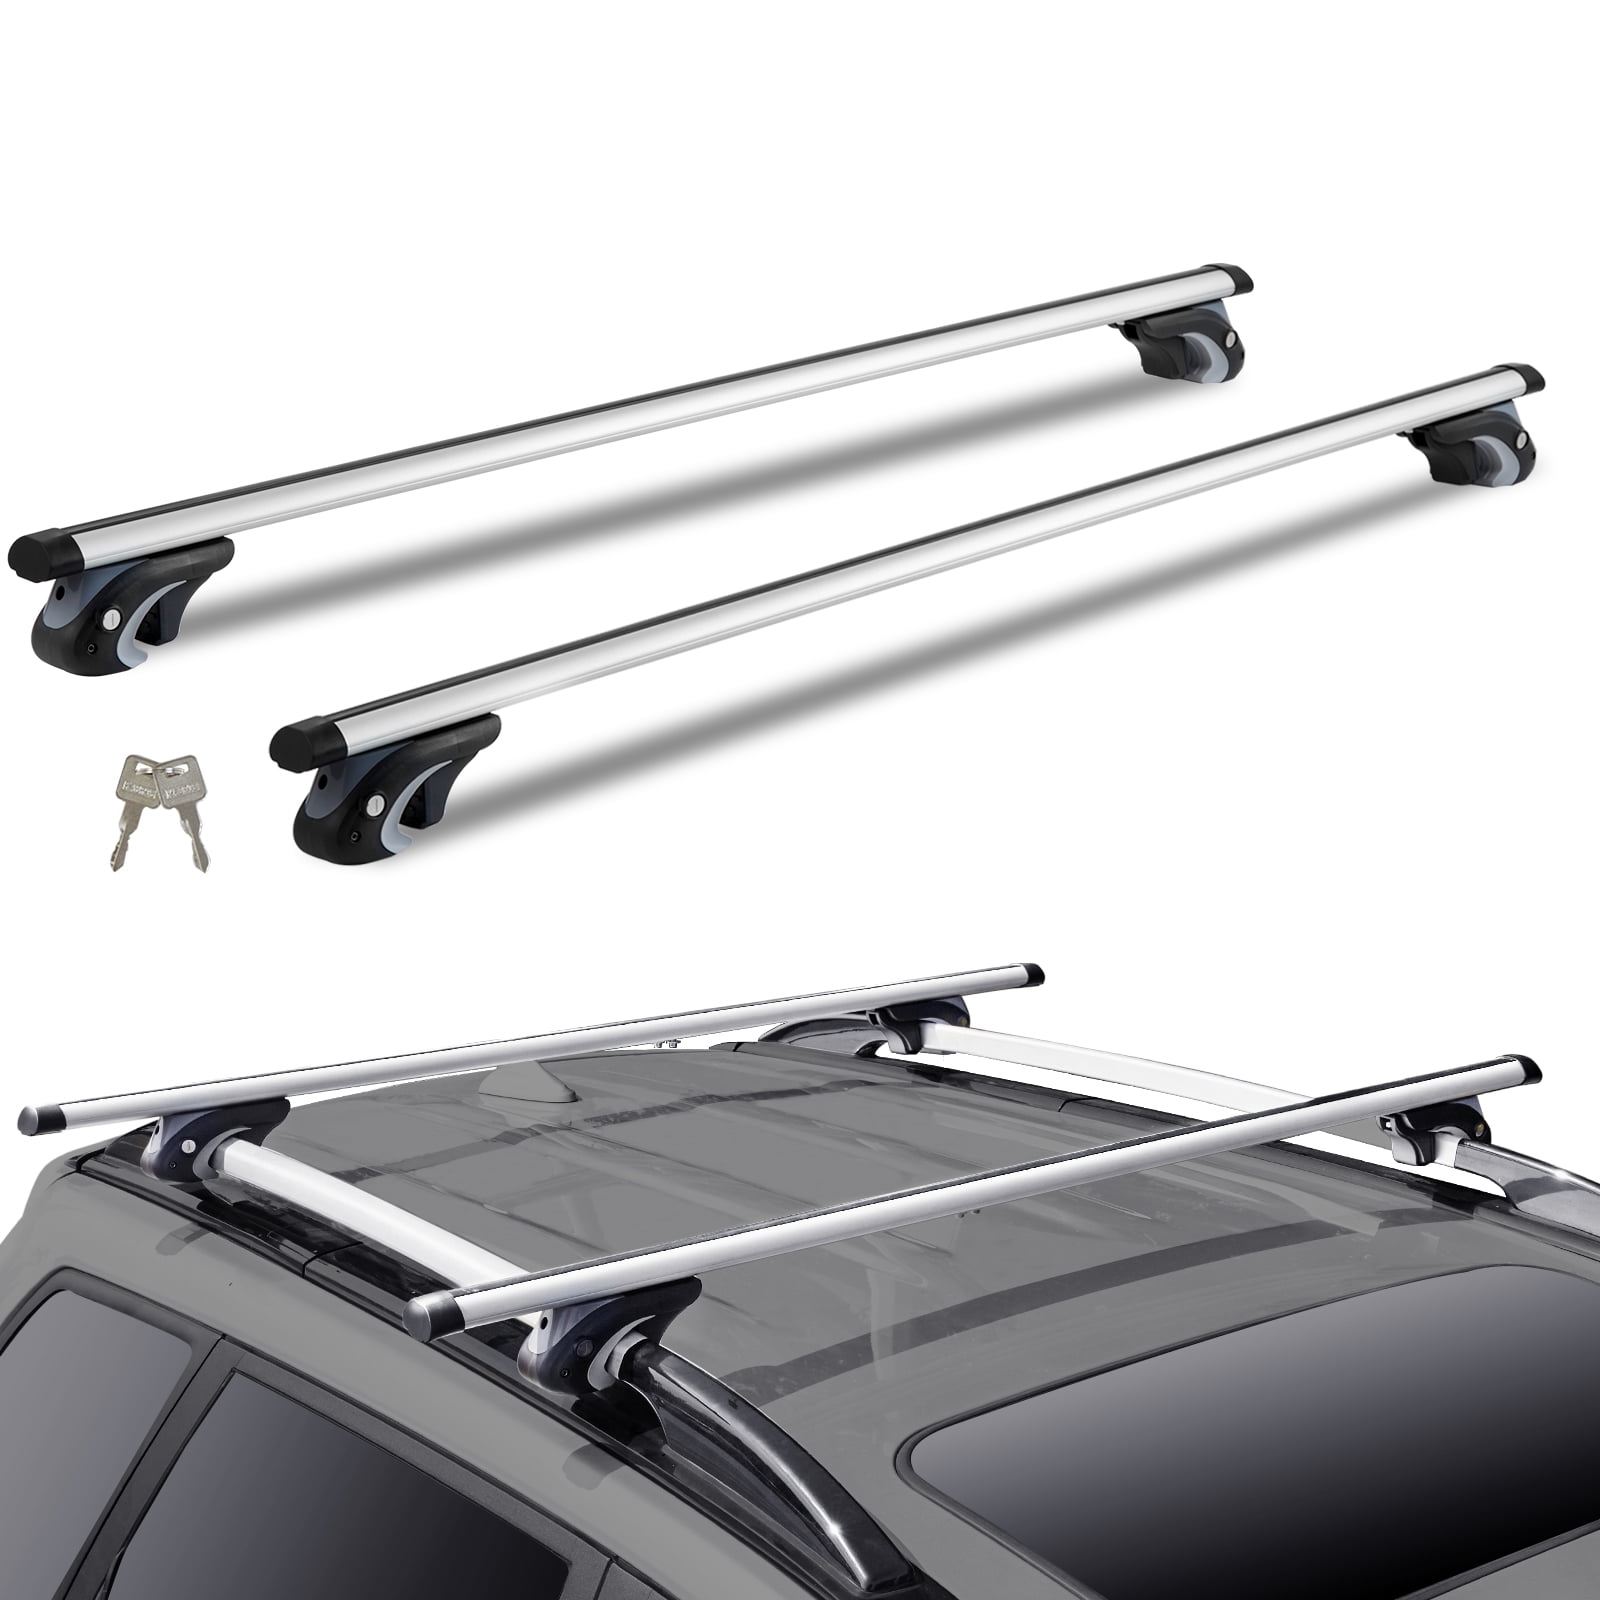  47” Pro Aluminum Universal Roof Rack Cross Bars with keyed  Locks Fully Assembled, Fit Raised Side Rails-Black : Automotive